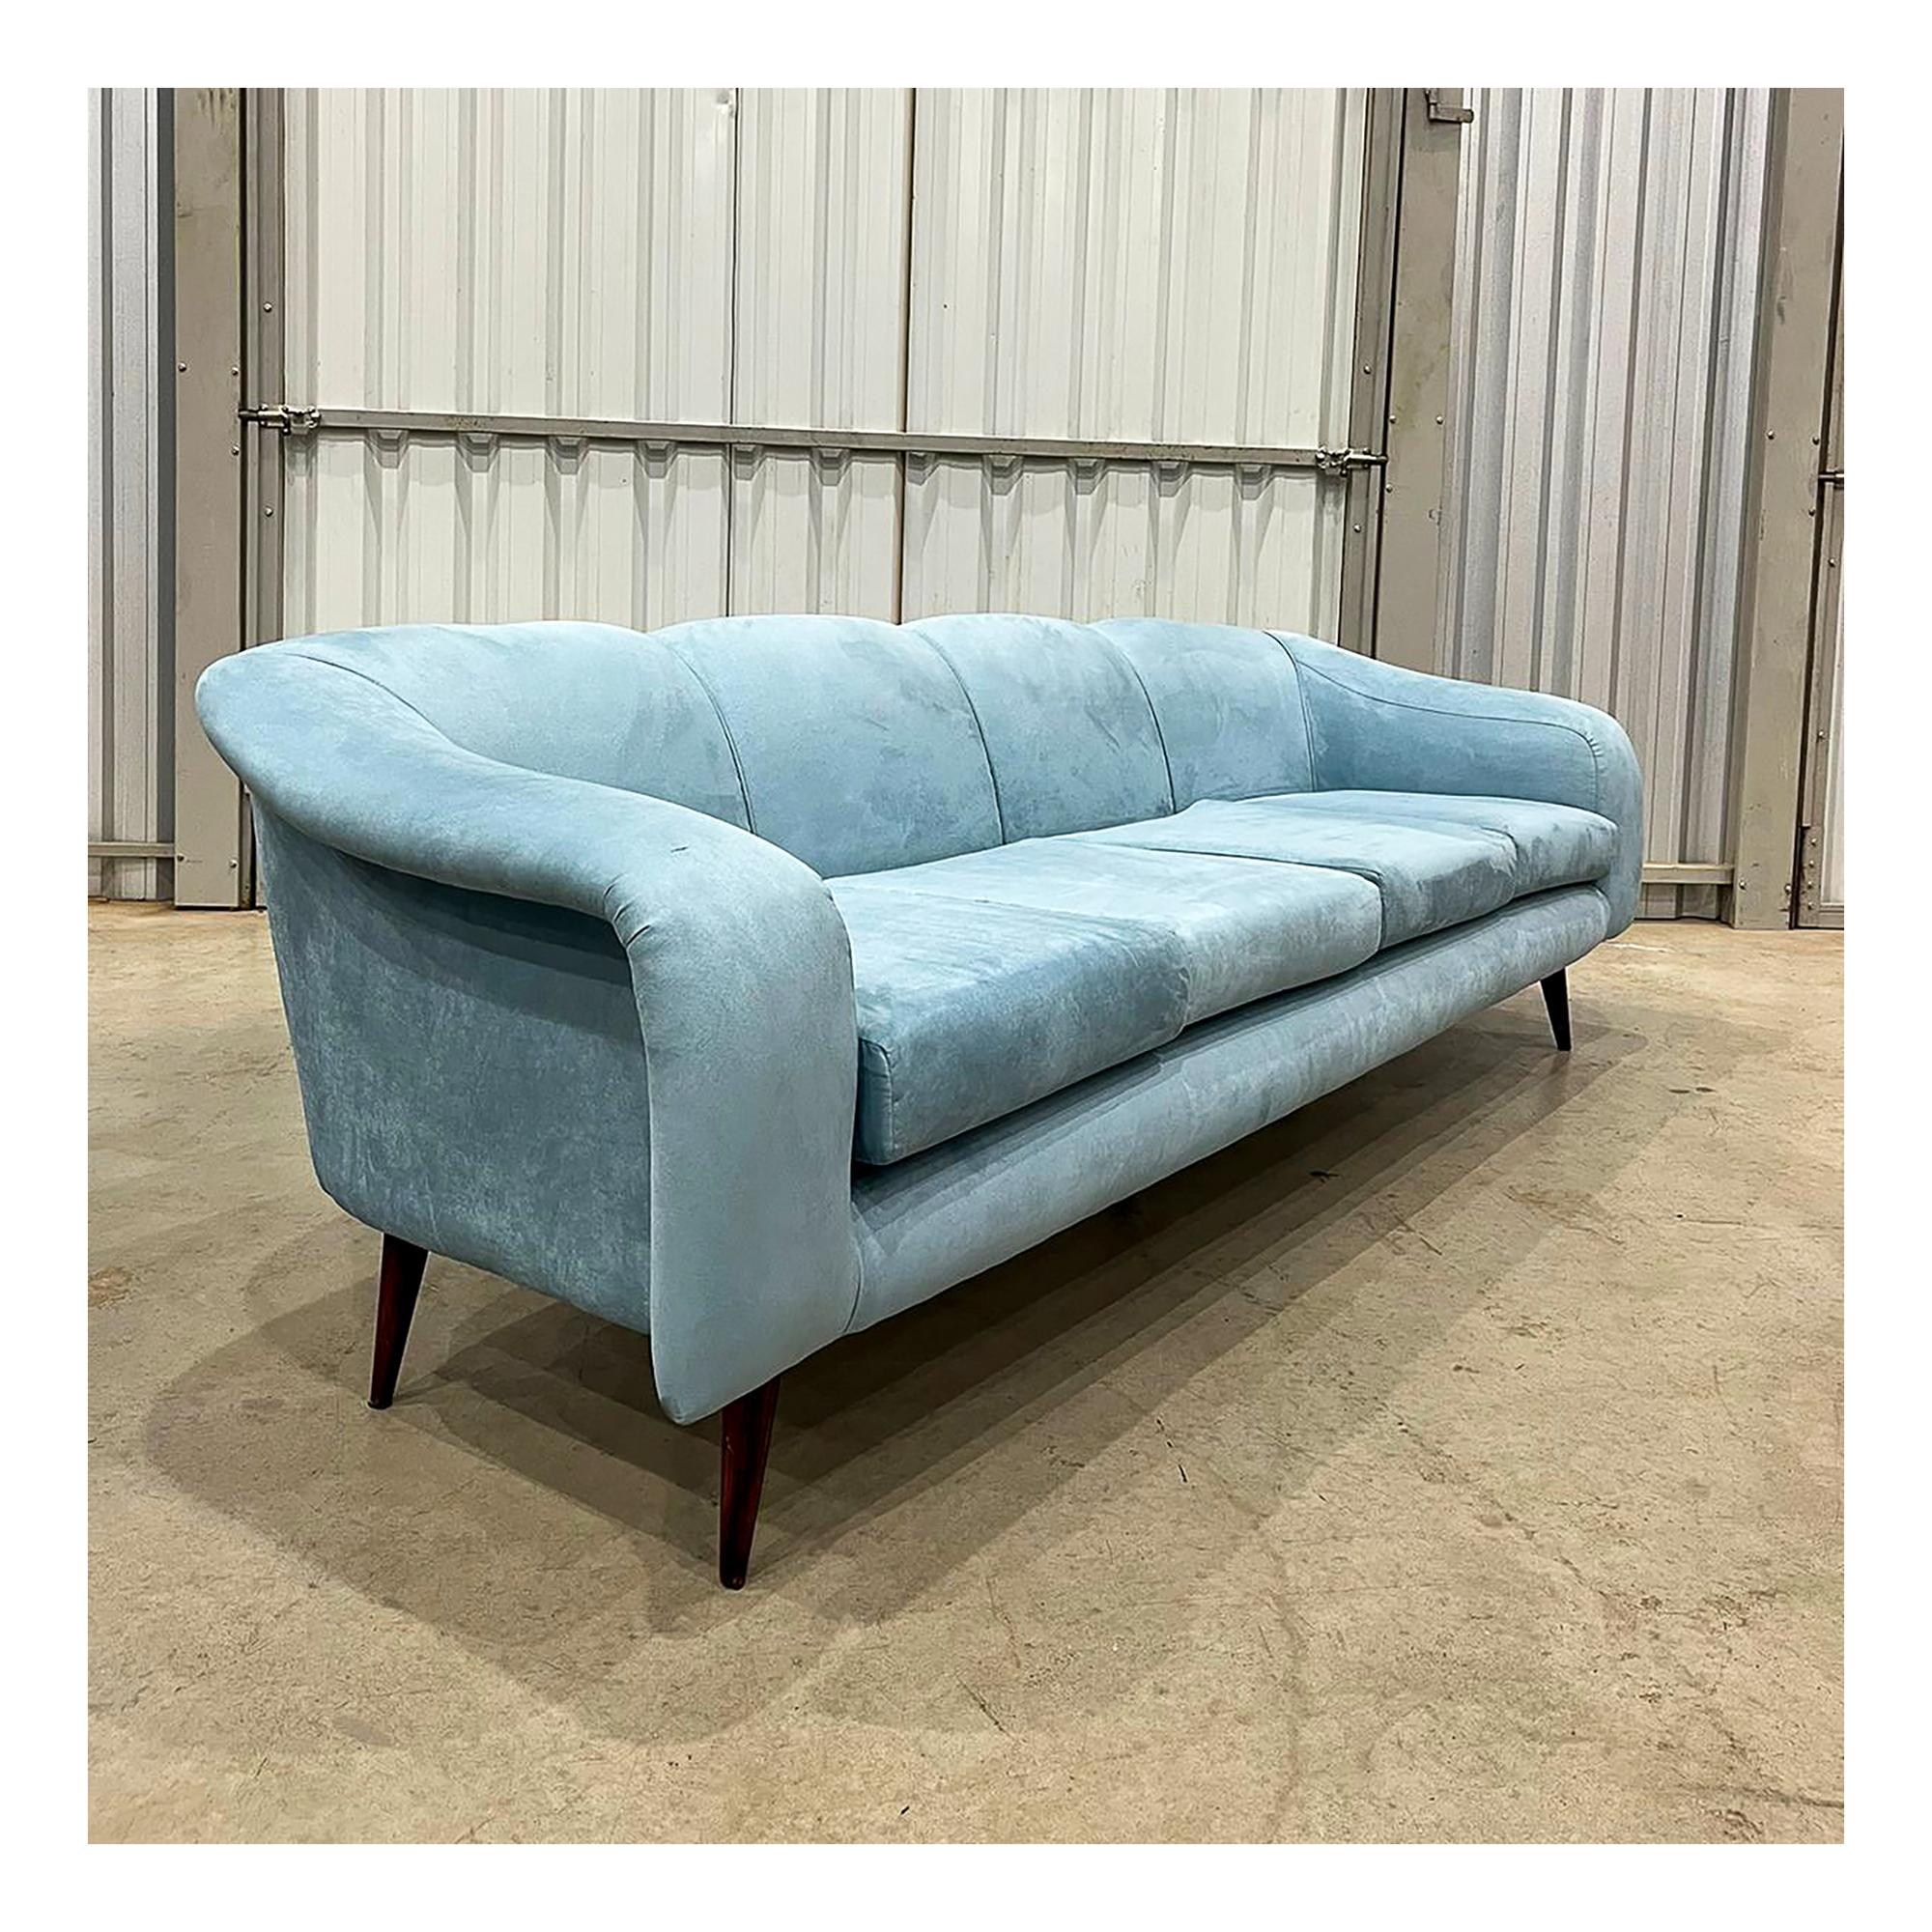 Brazilian Modern Sofa in Hardwood & Light Blue Fabric, Joaquim Tenreiro, c. 1960 For Sale 5